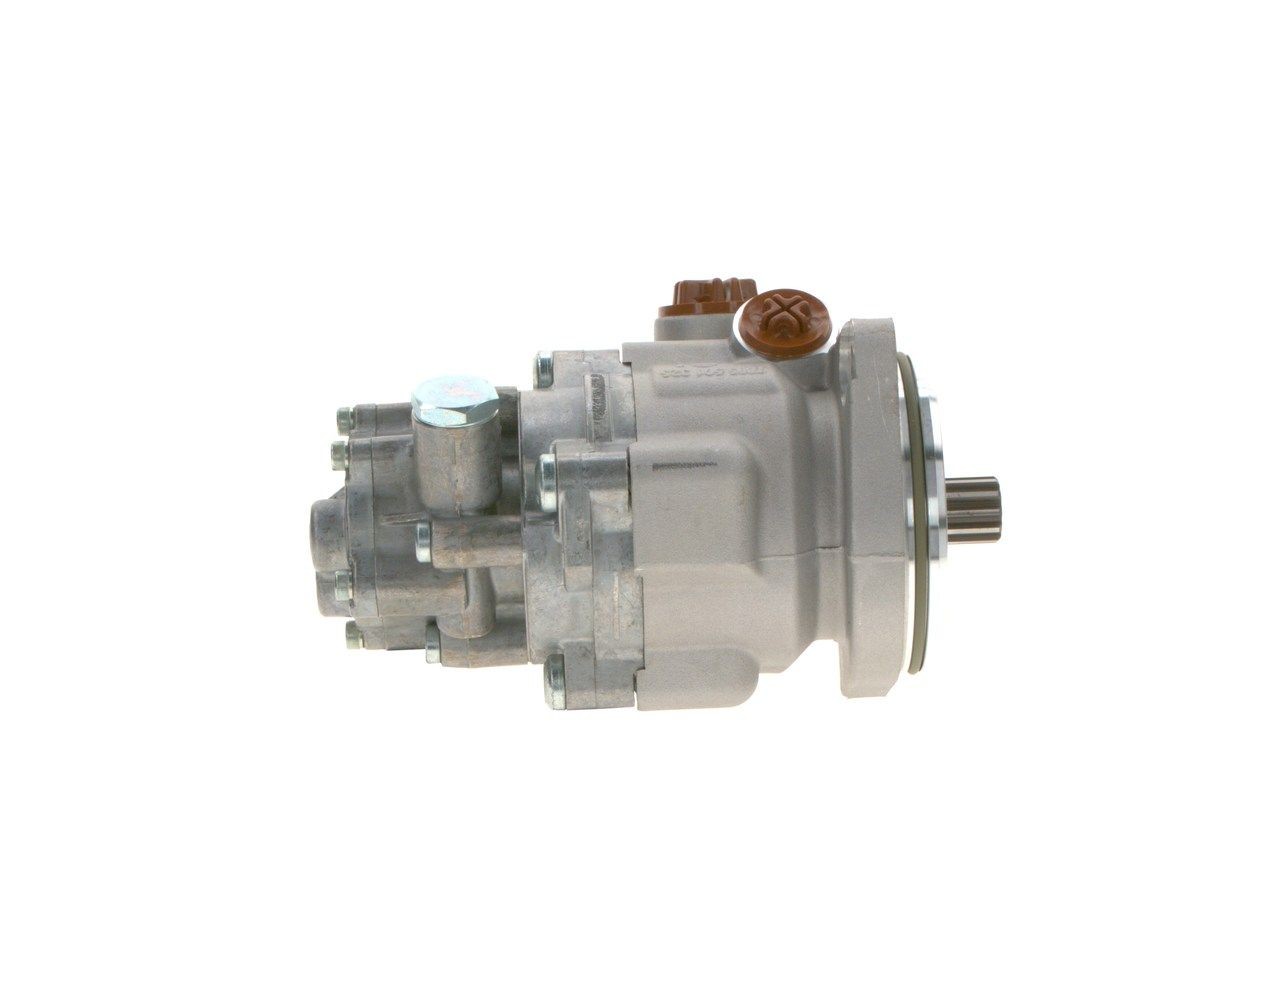 KS01001353 EHPS Pump 8695955139 BOSCH Hydraulic, 180 bar, Pressure-limiting Valve, M 26 x 1,5, Tandem Pump, Anticlockwise rotation